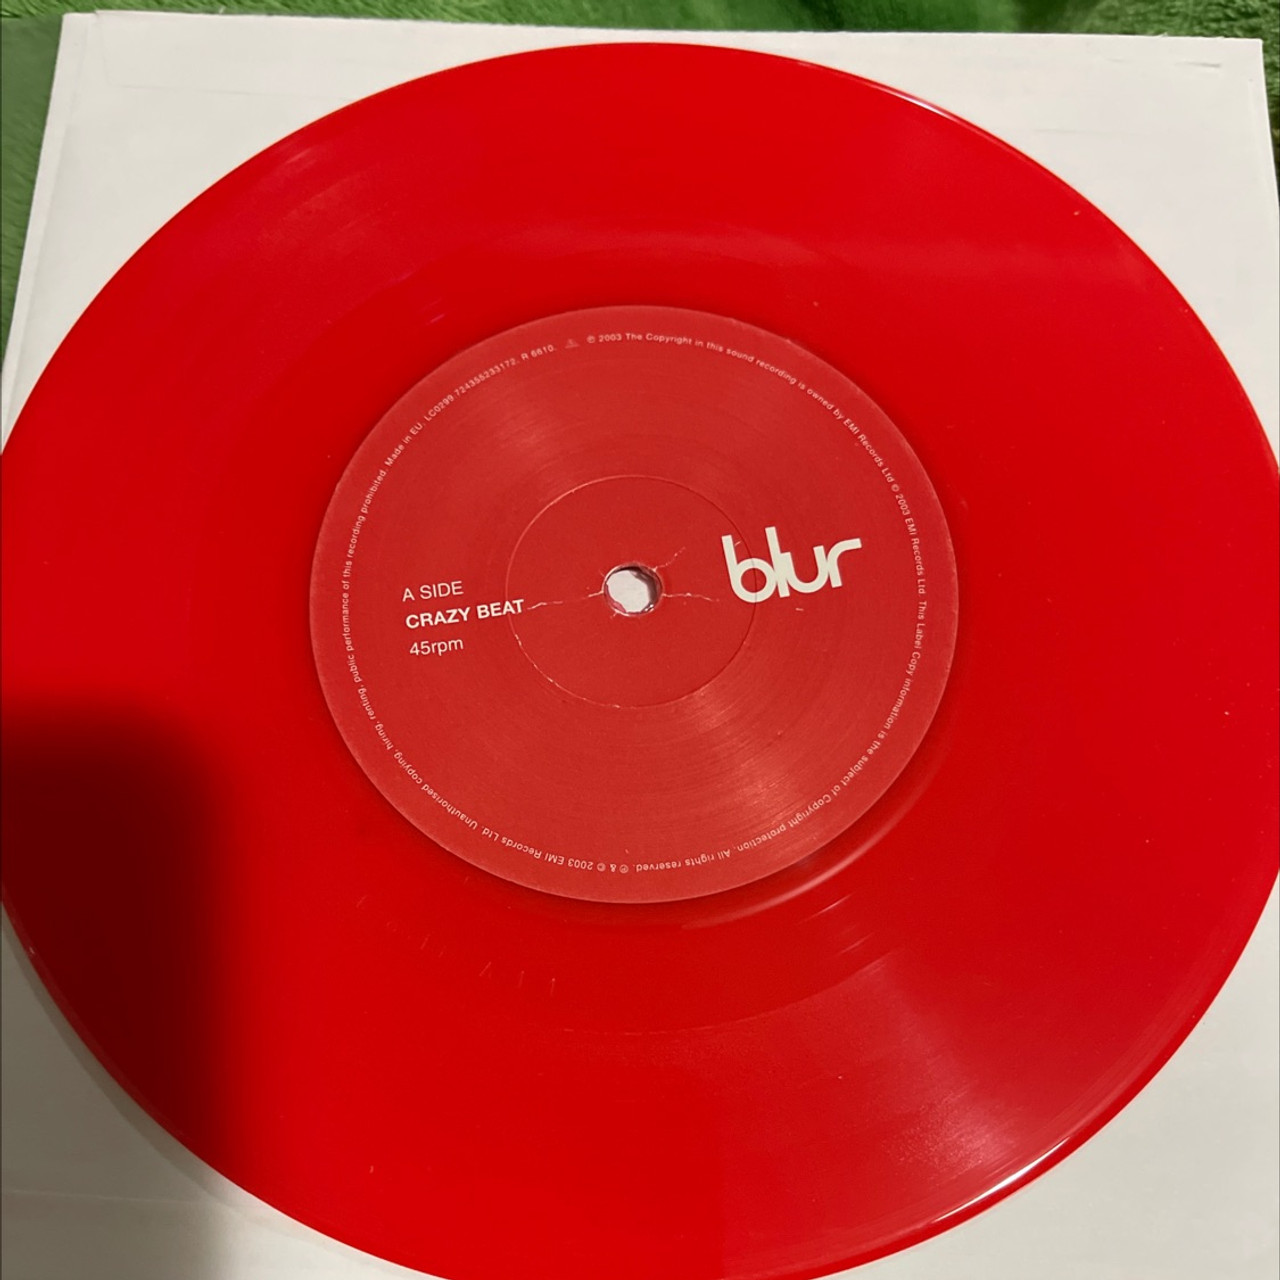 Blur - Crazy Beat (2003 NM/NM 7” on Red Vinyl- Banksy Art Cover